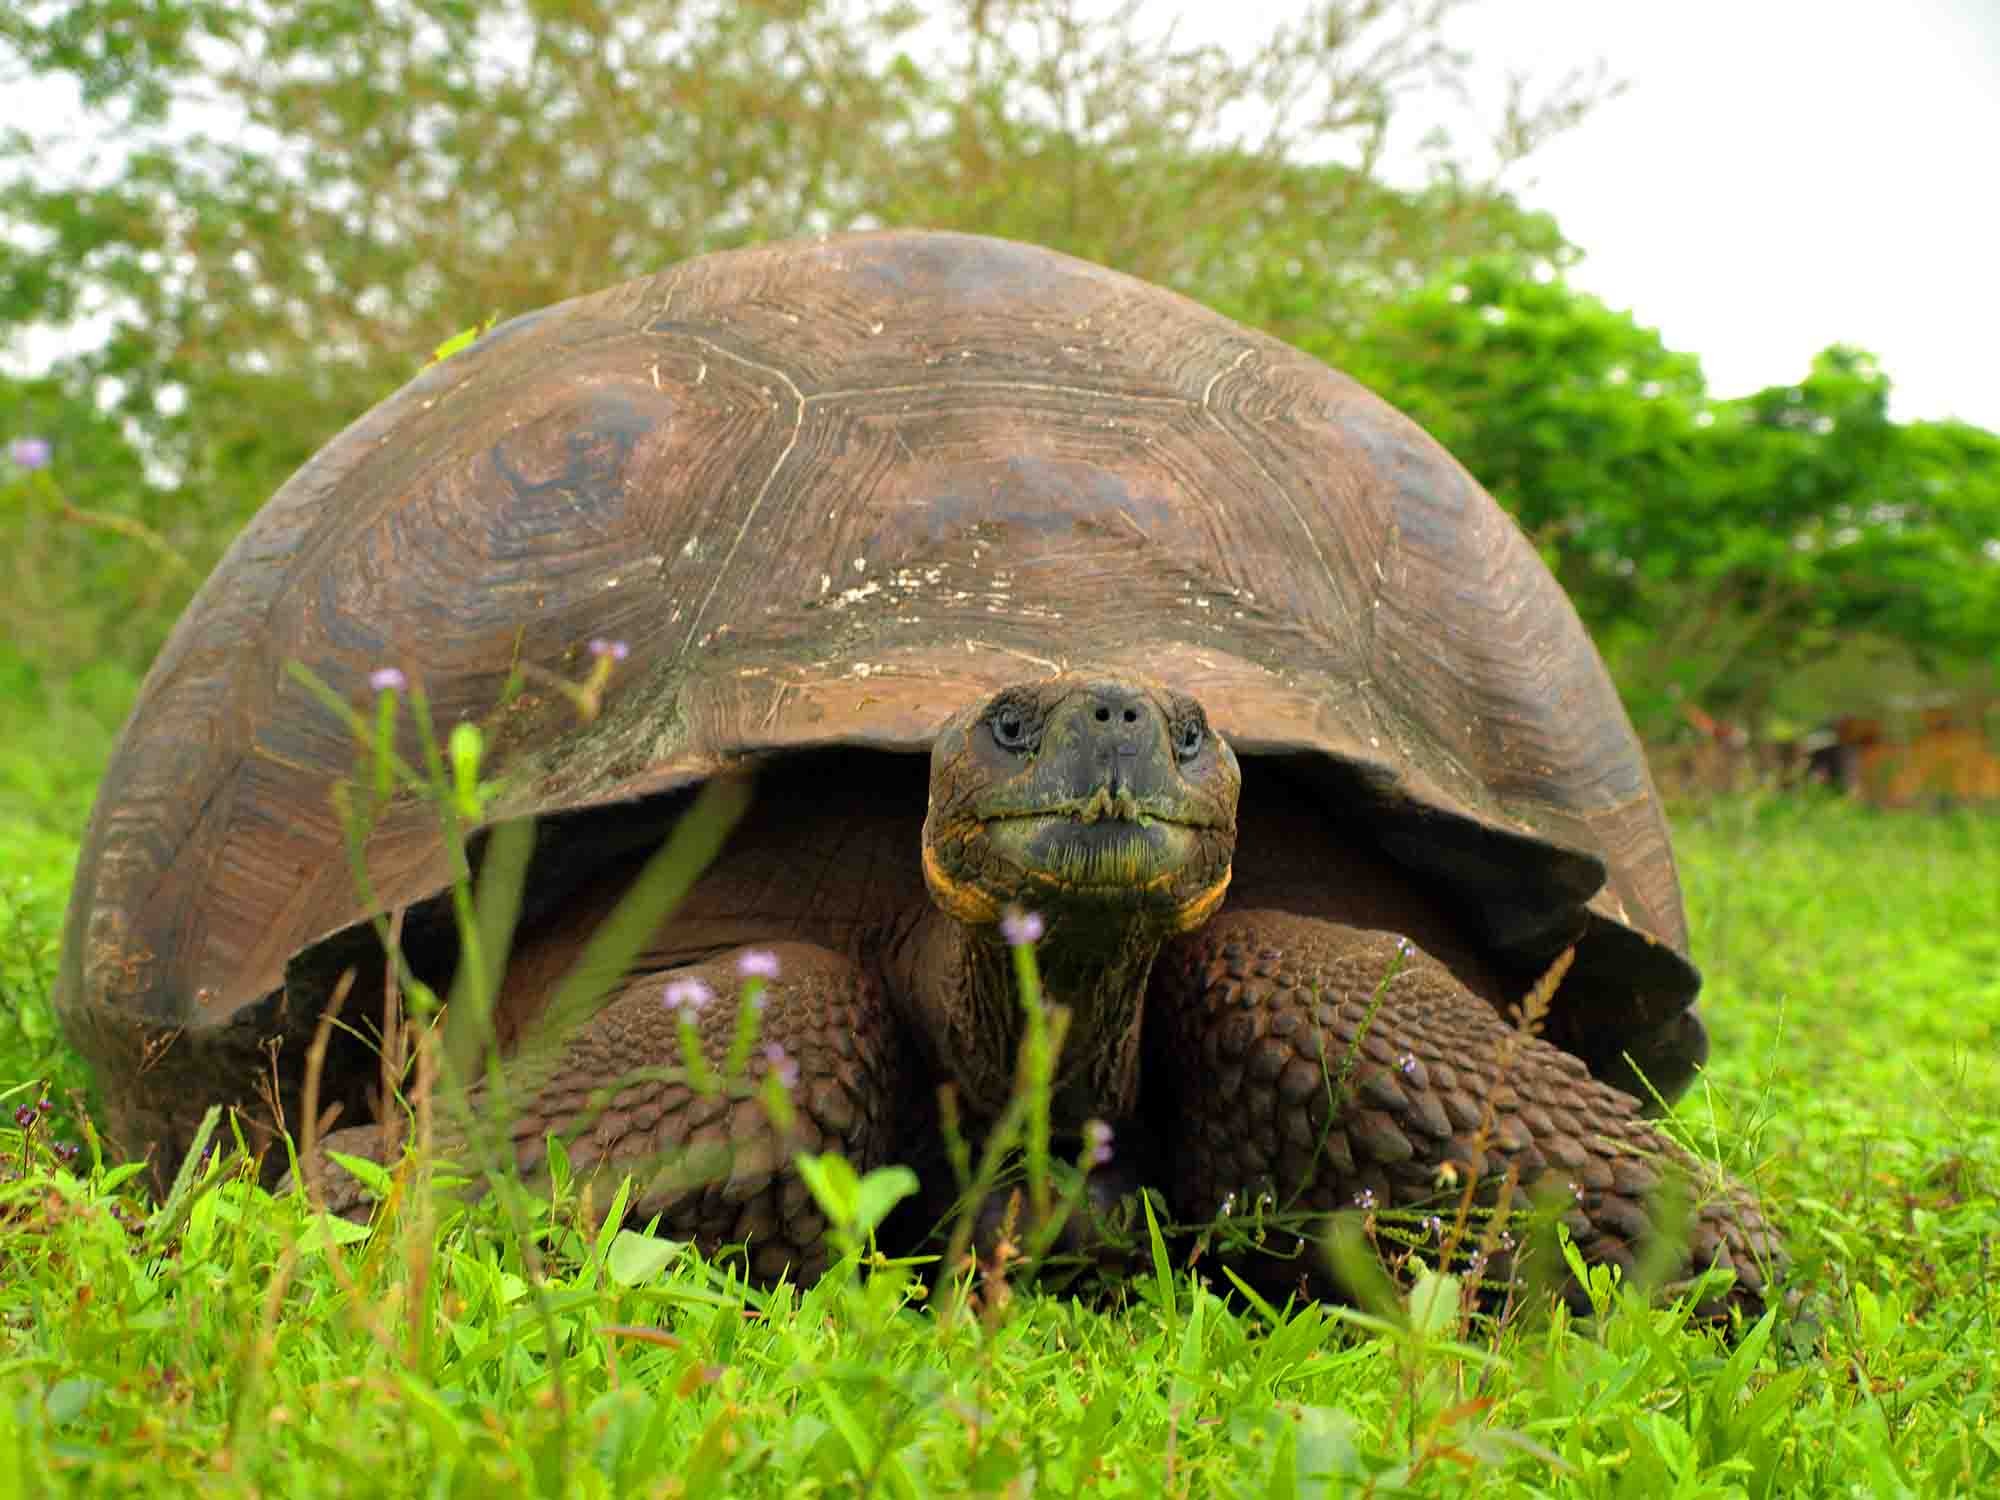 Tierras Altas de Santa Cruz | Giant tortoise | Galapagos Islands